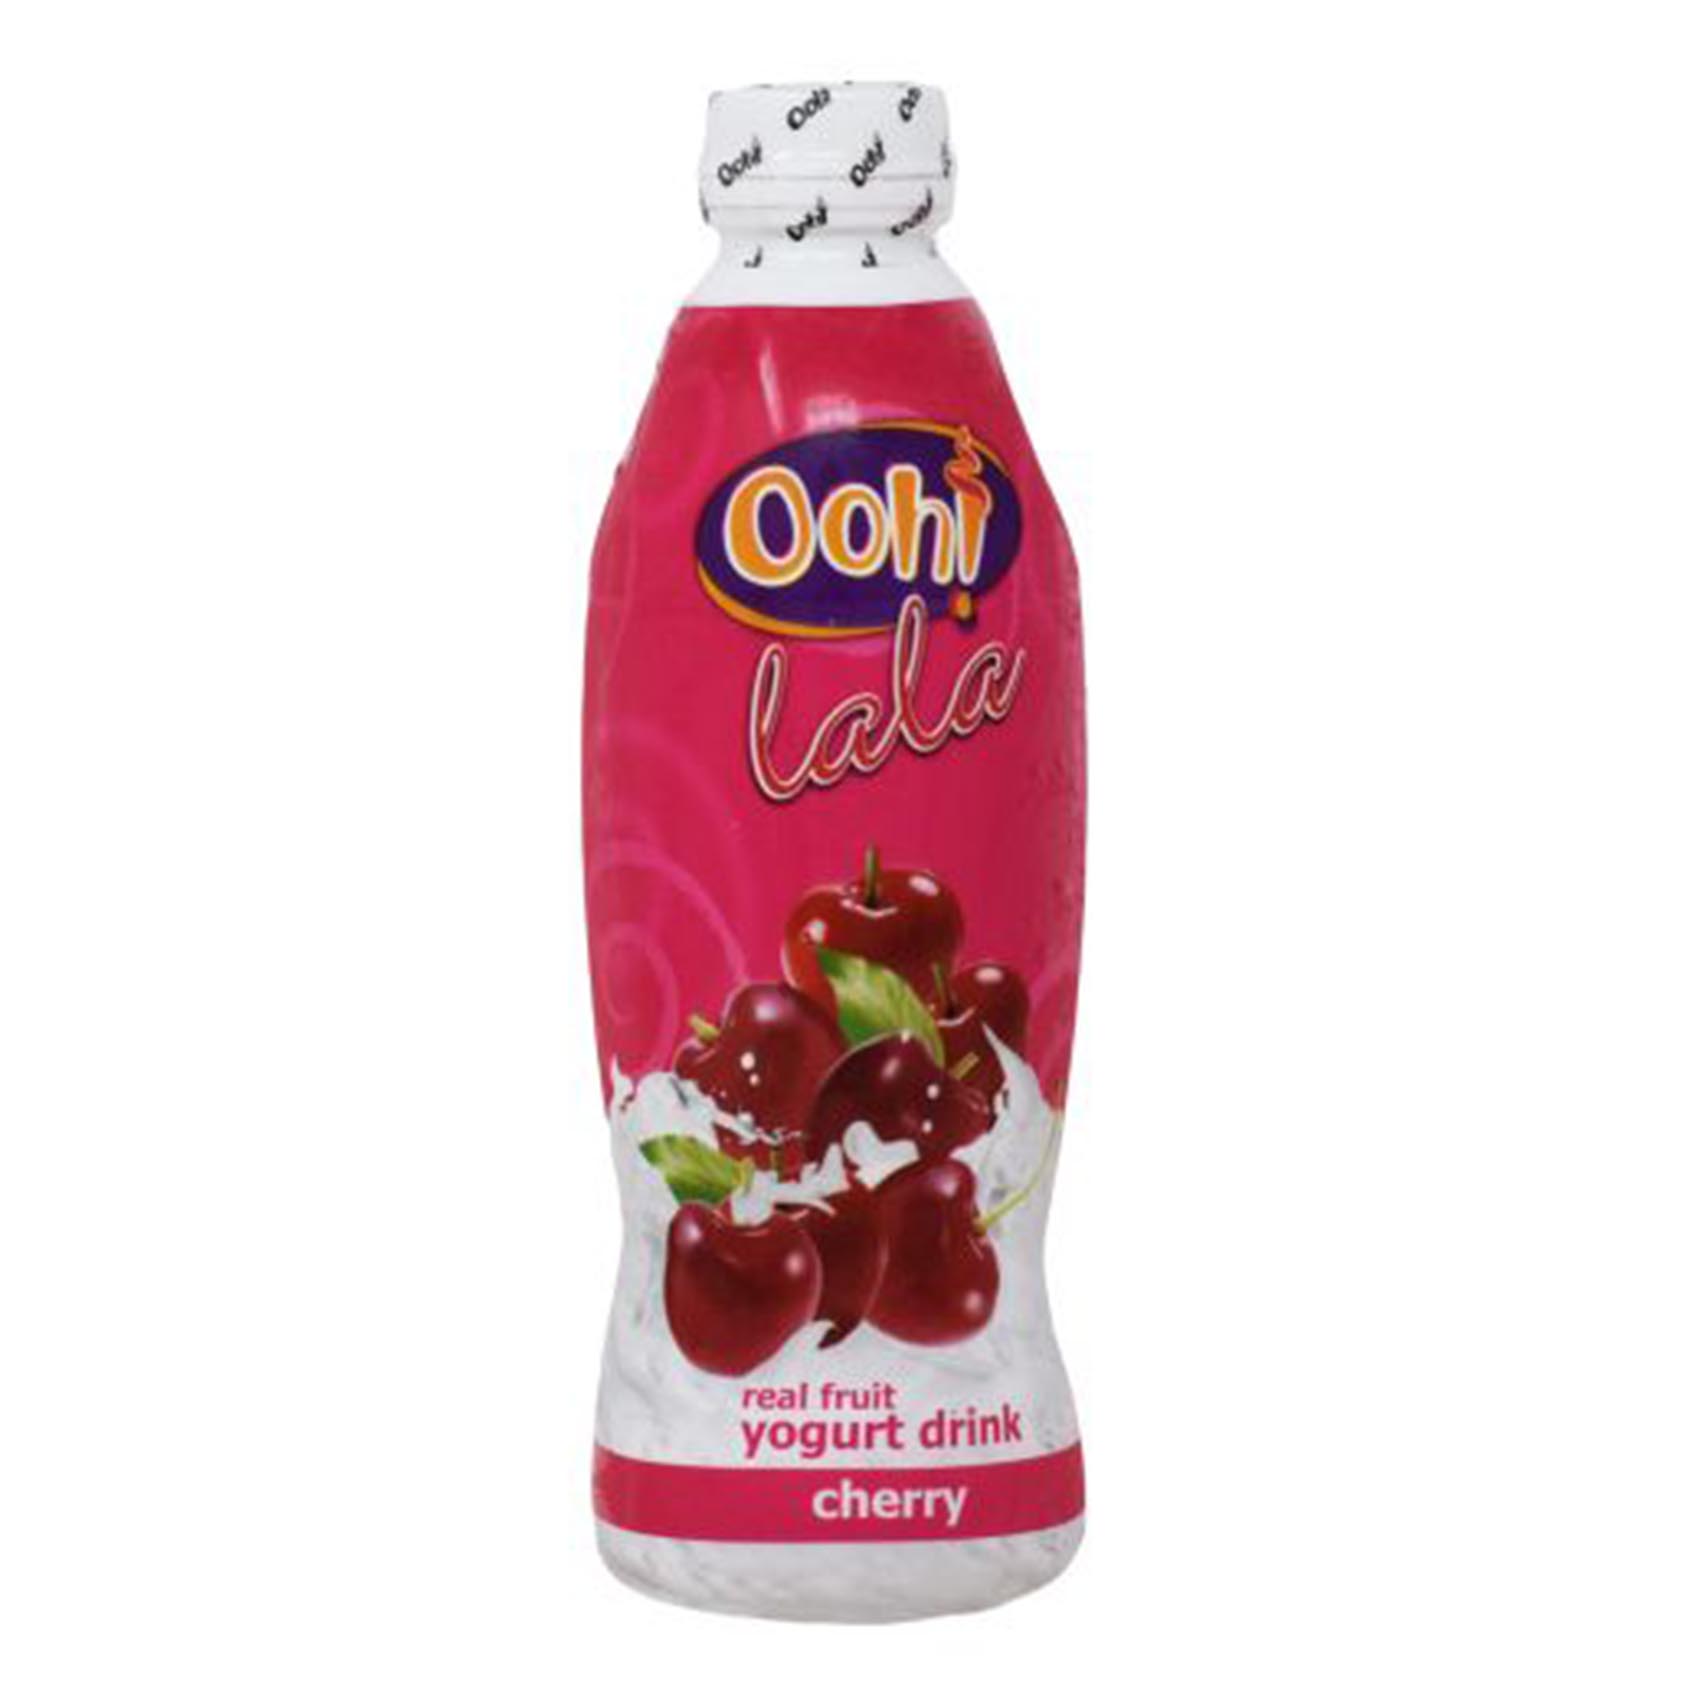 Ooh! Lala Real Fruit Cherry Yogurt Drink 1L